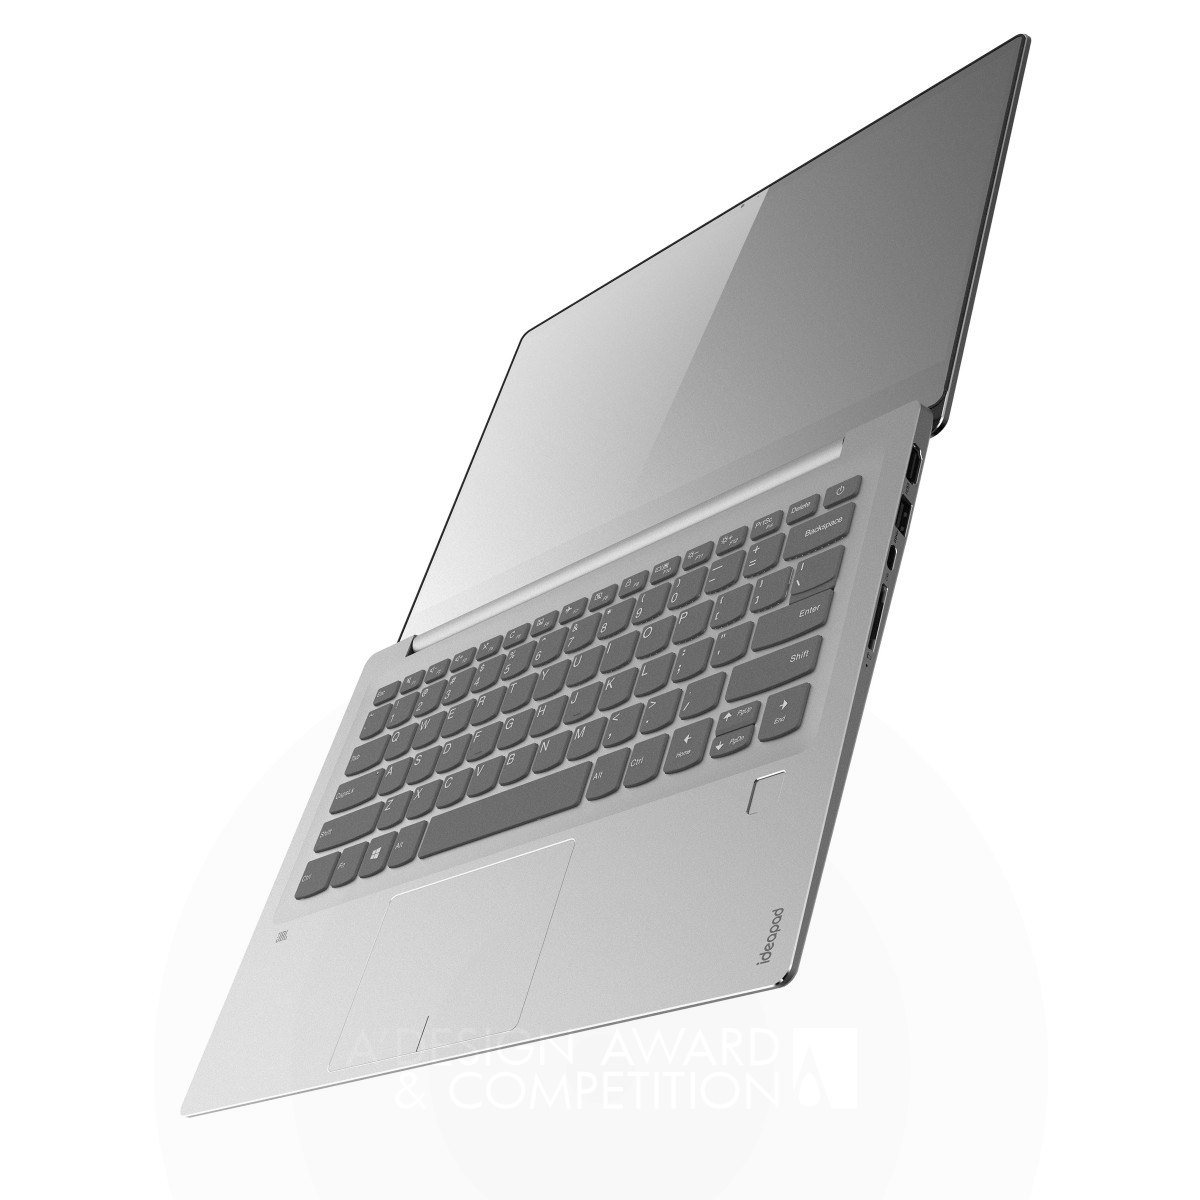 ideapad 720S-14 2017 <b>laptop computers